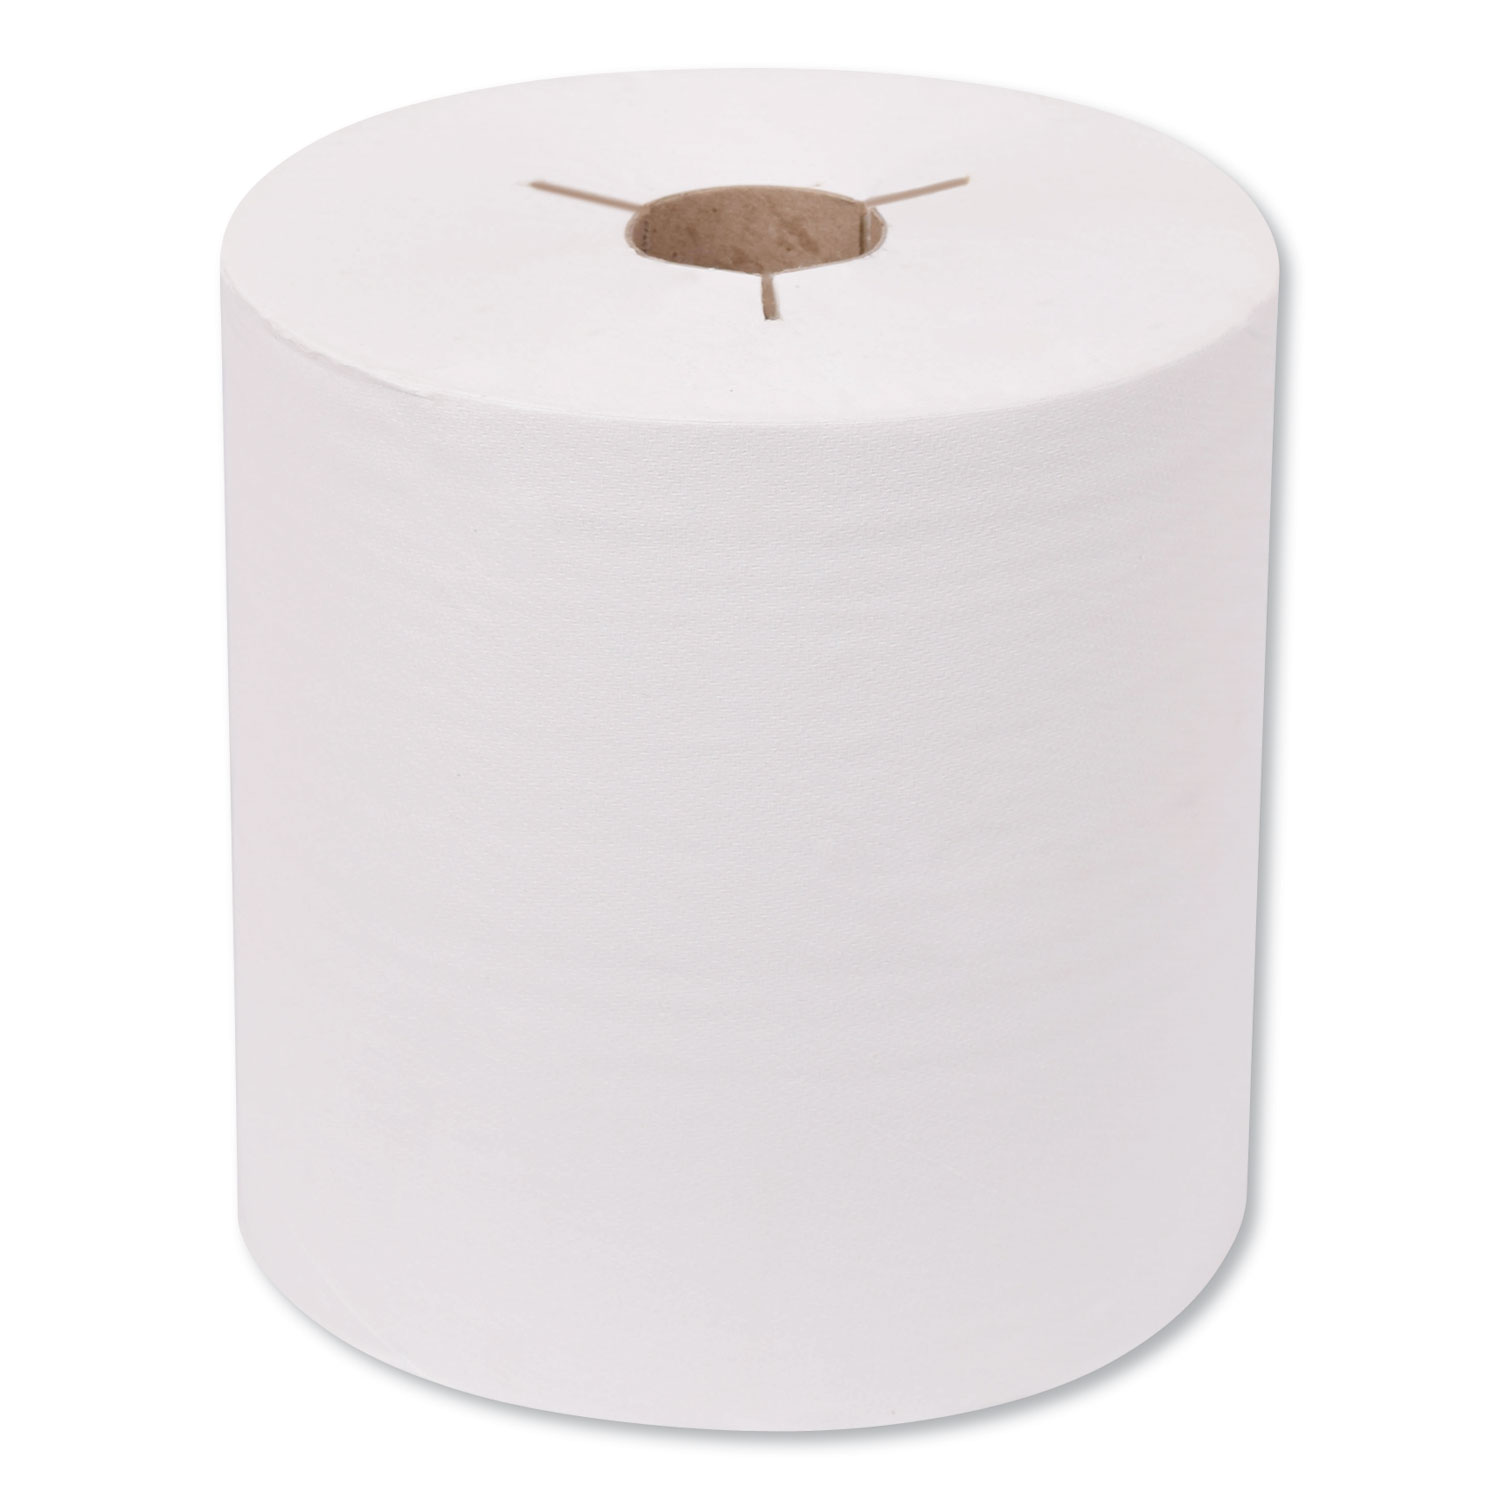  Tork 8038040 Advanced Hand Towel Roll, Notched, 8 x 800 ft, White, 6 Rolls/Carton (TRK8038040) 